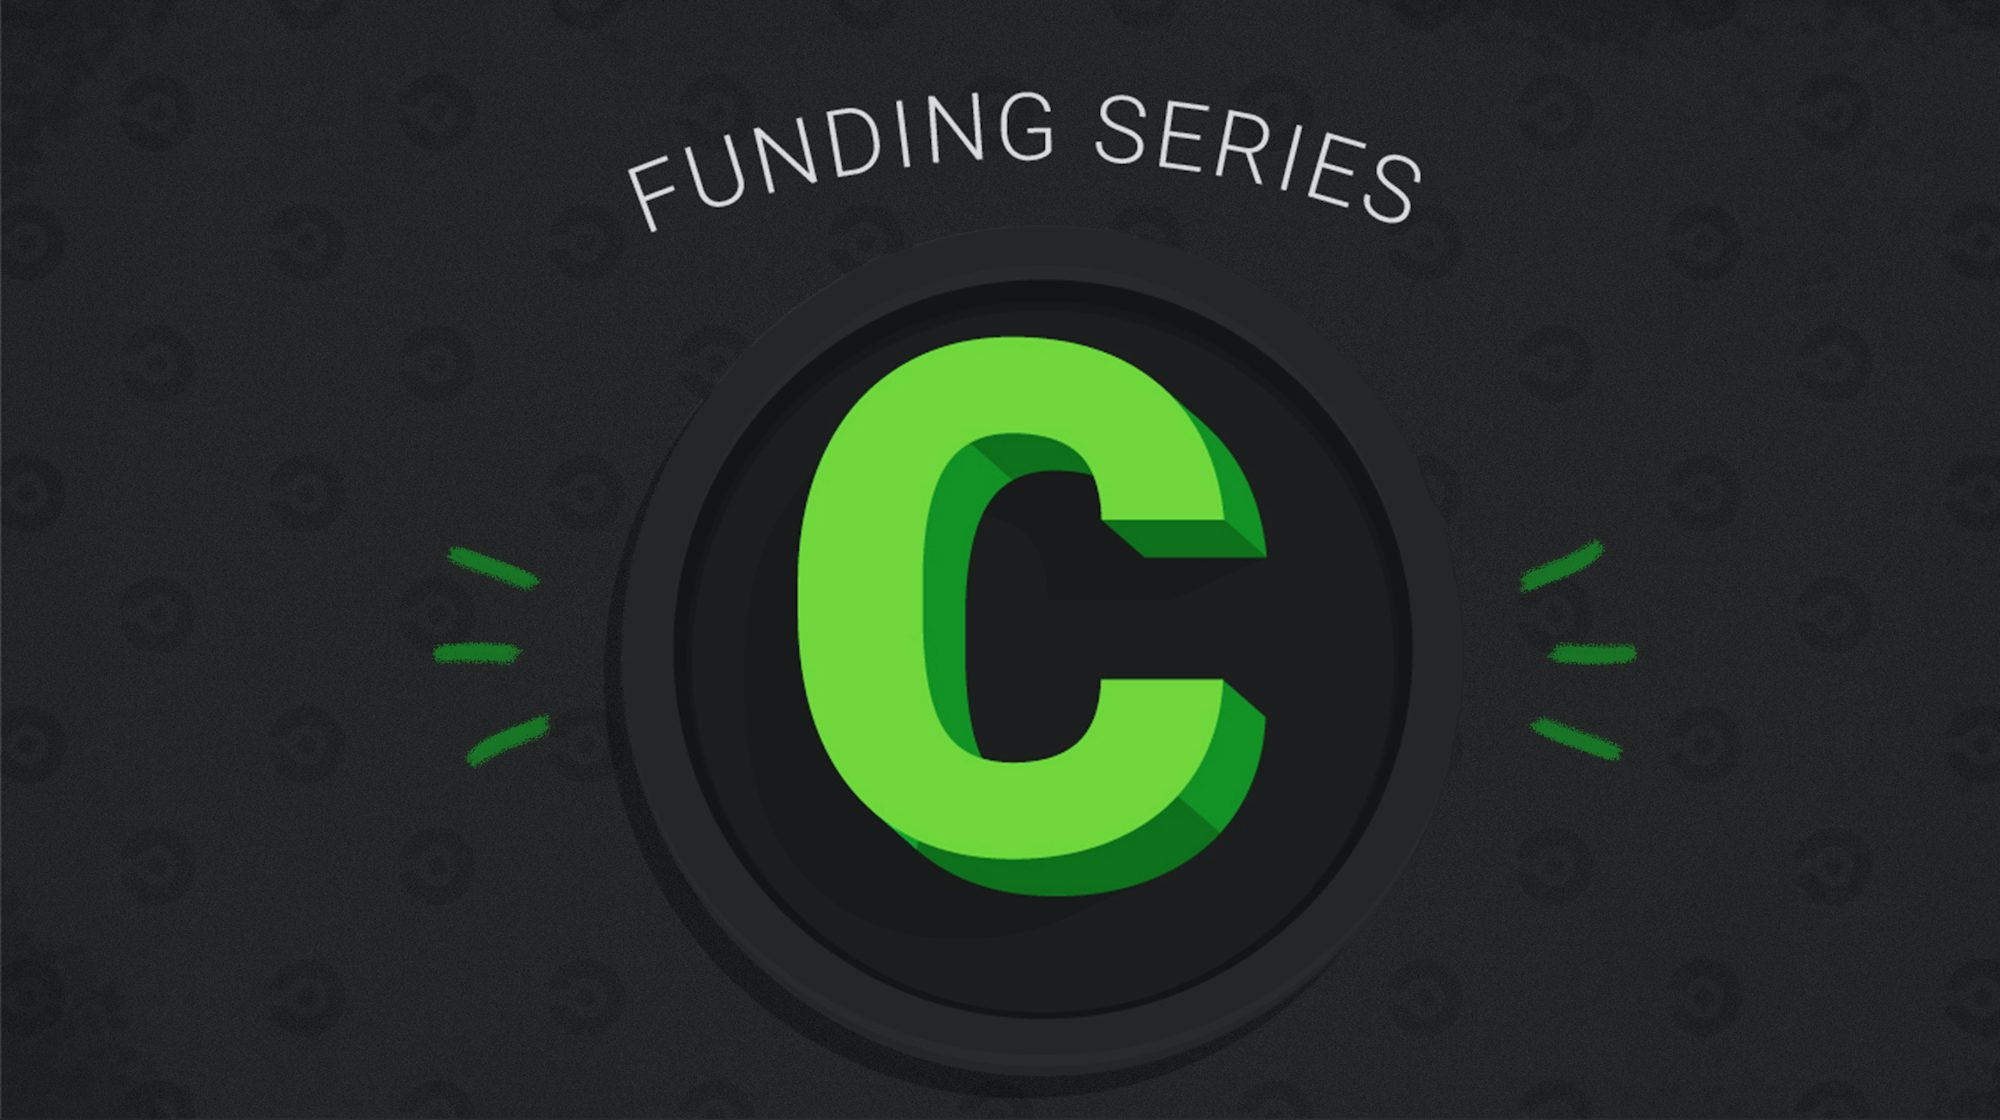 Funding Series C